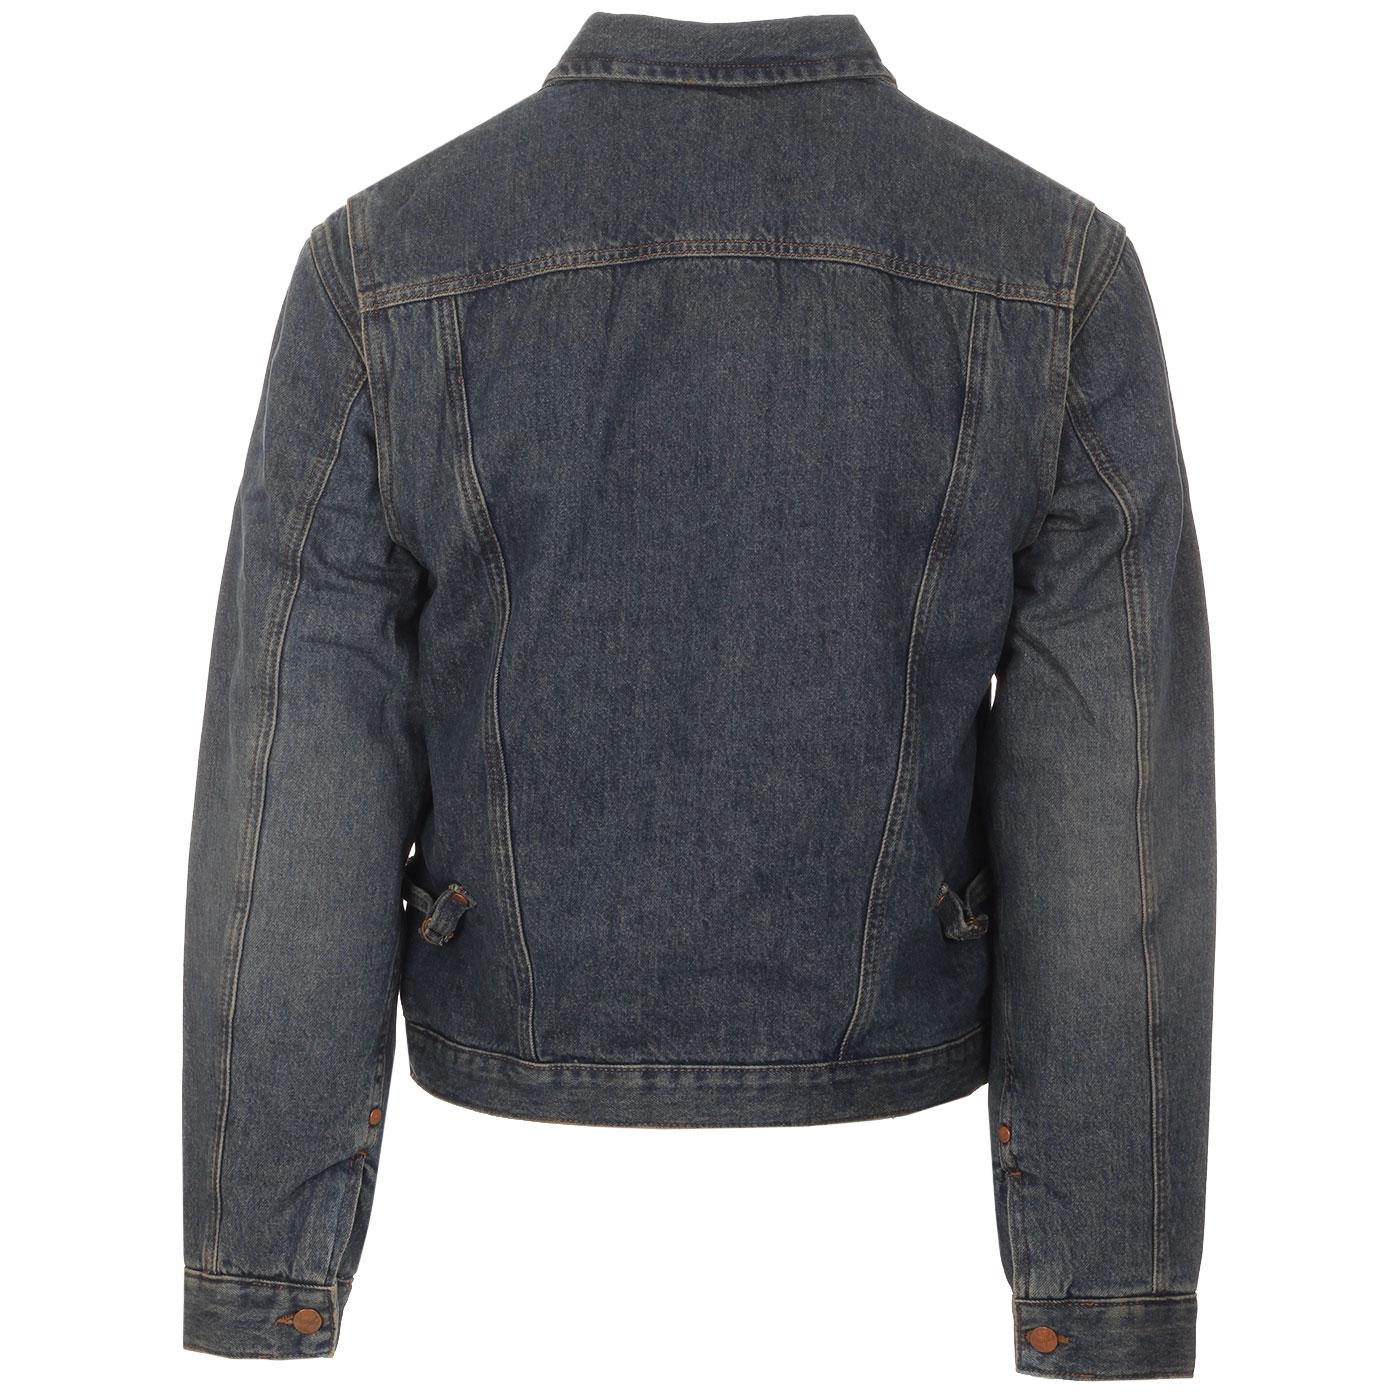 WRANGLER Flannel Lined Heritage Denim Jacket in Tinted Dark